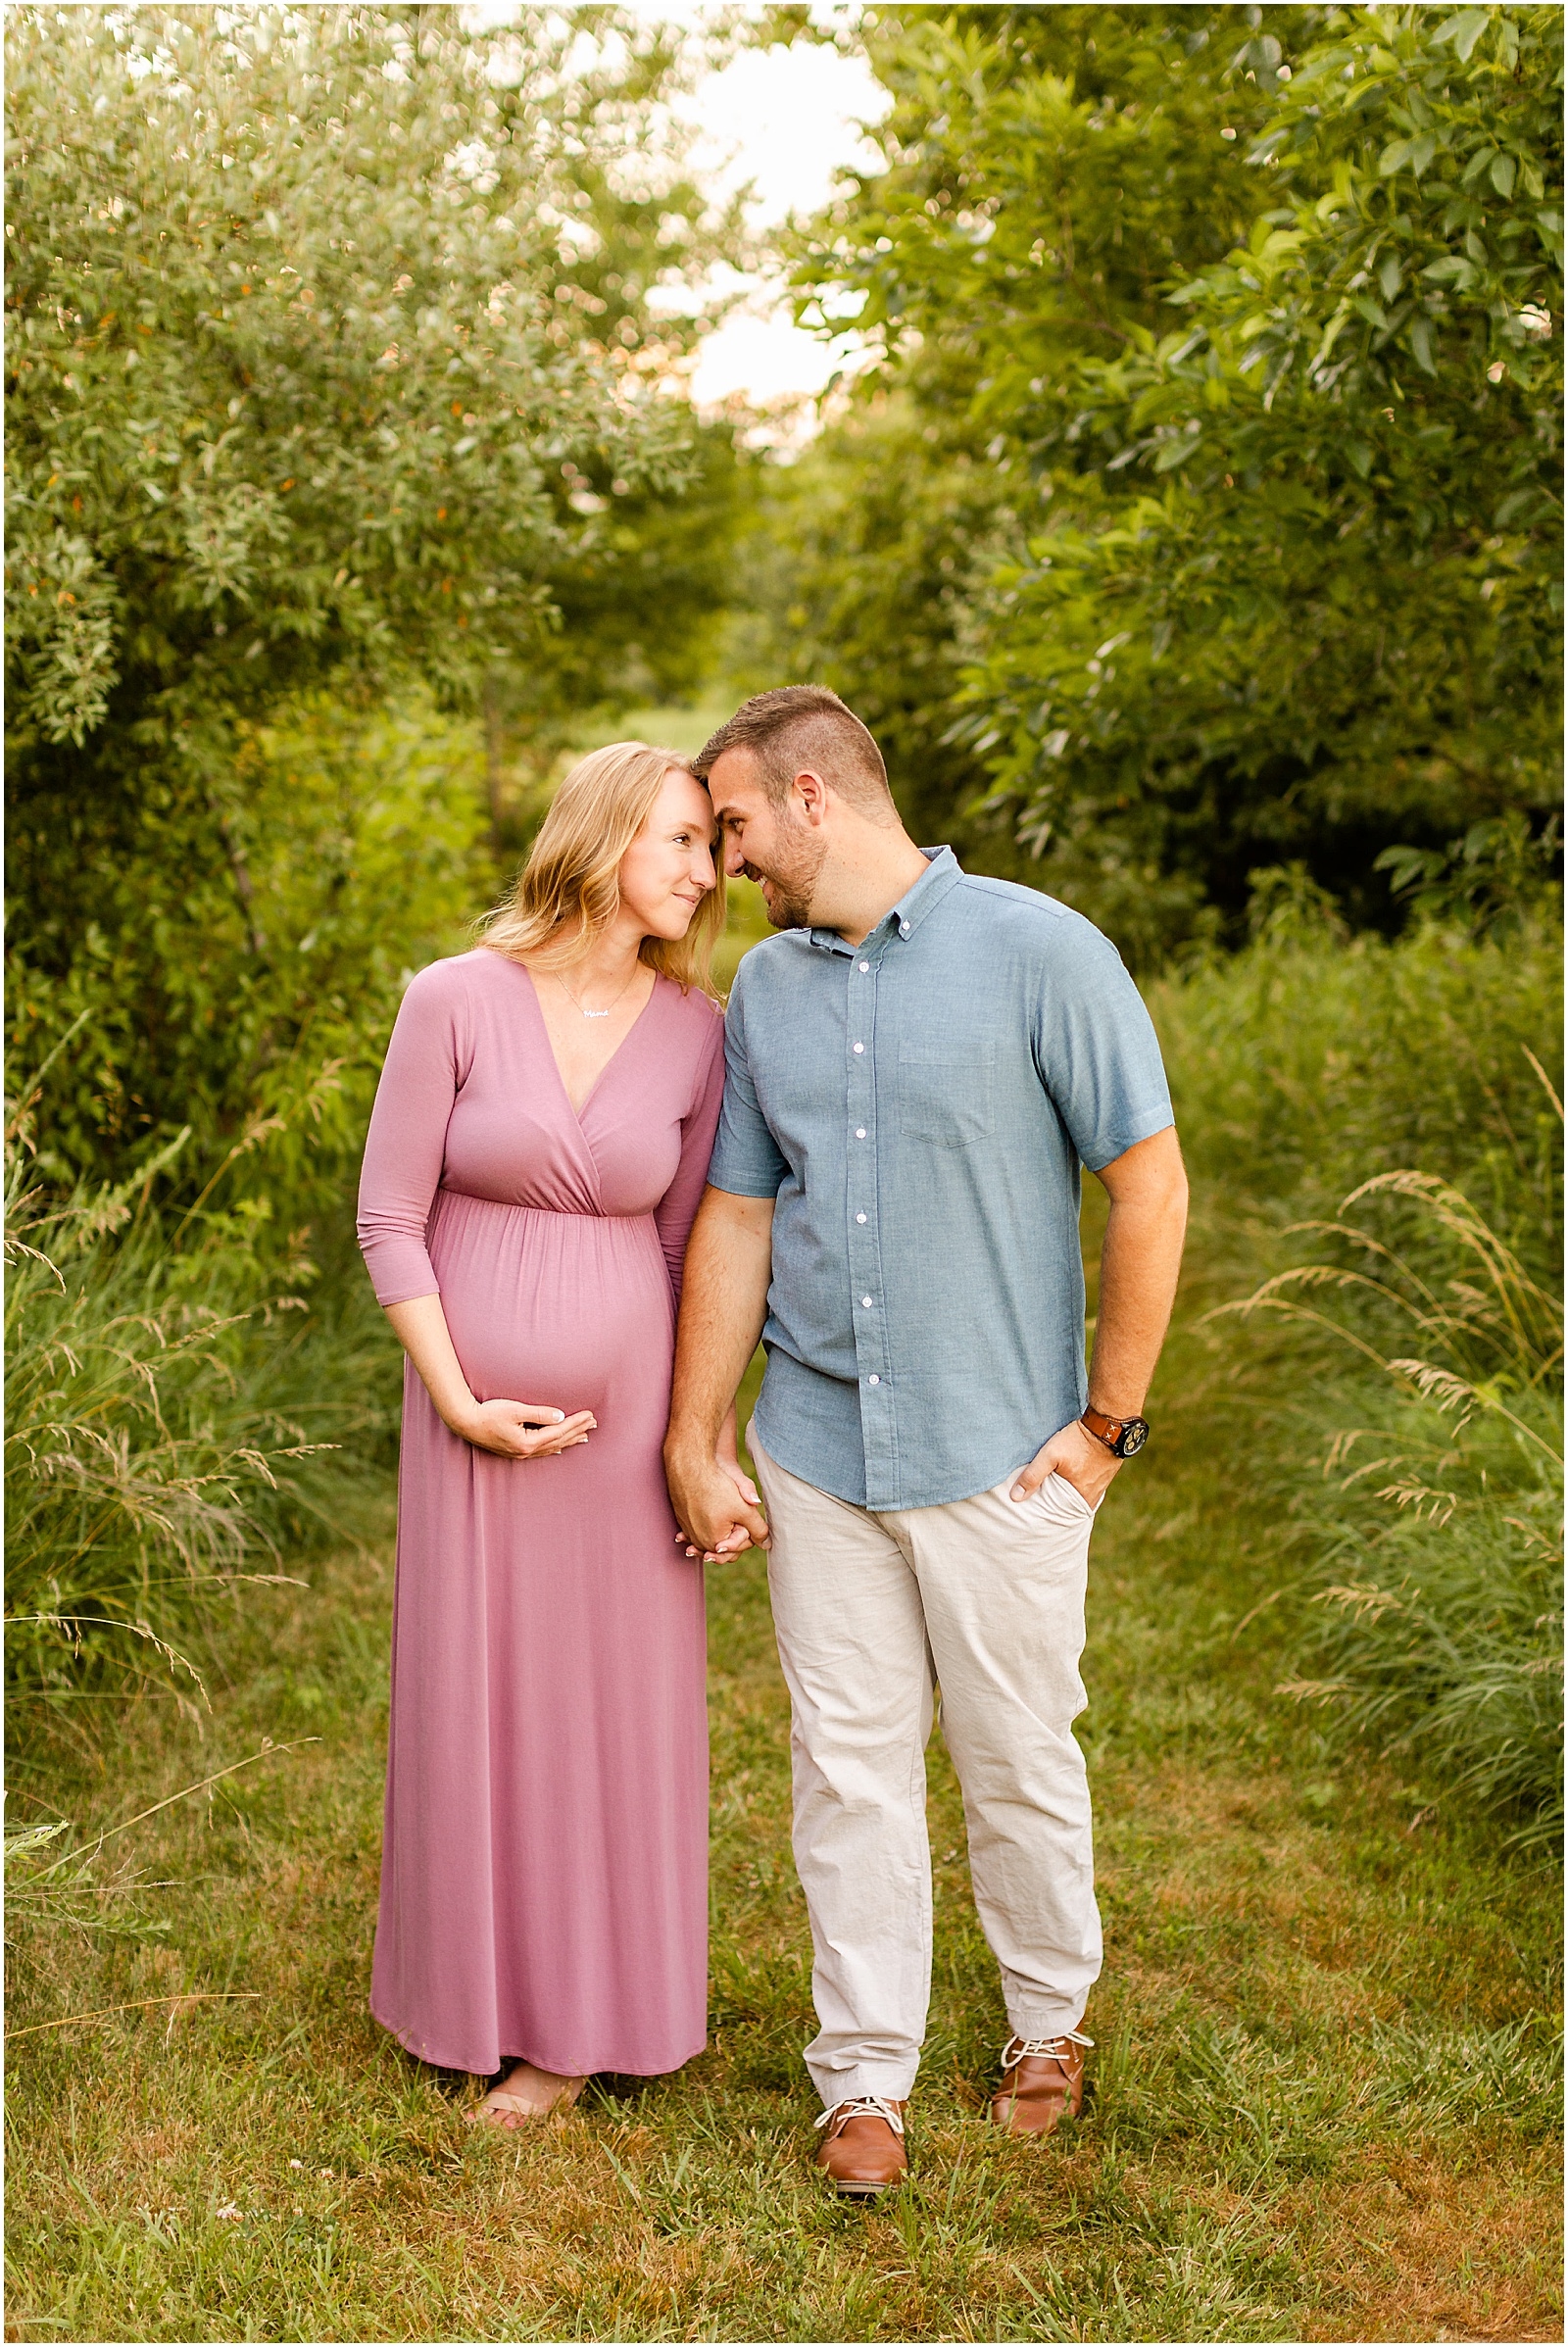 Ellen and Jake | Maternity Session Bret and Brandie | Evansville Photographers | @bretandbrandie-0023.jpg